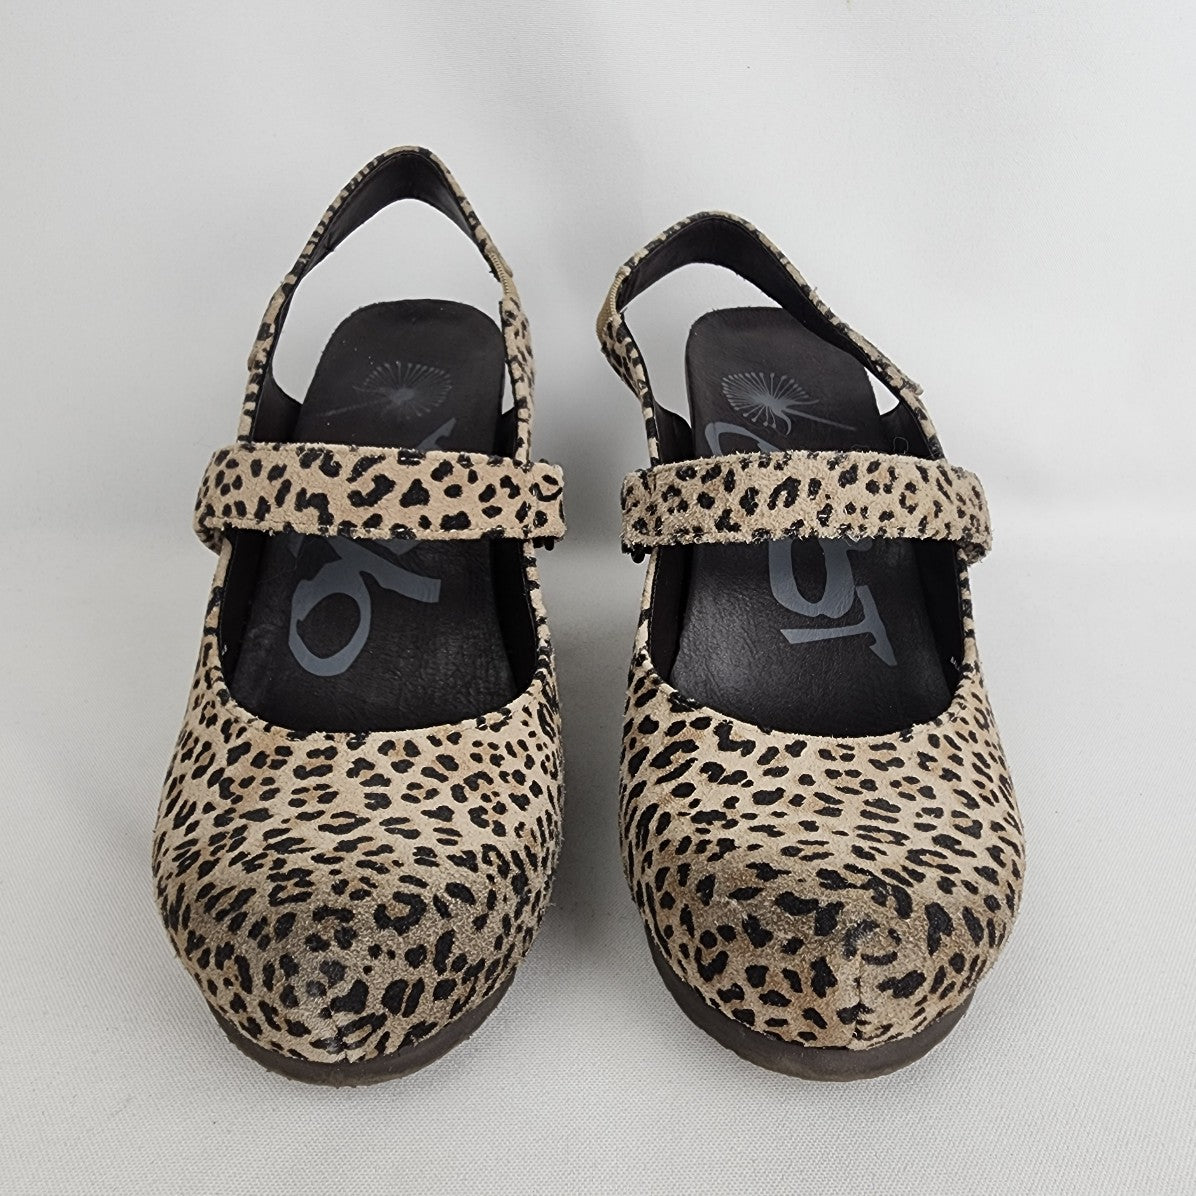 OTBT Animal Print Leather Calf Hair Wedge Heel Shoes Size 7.5